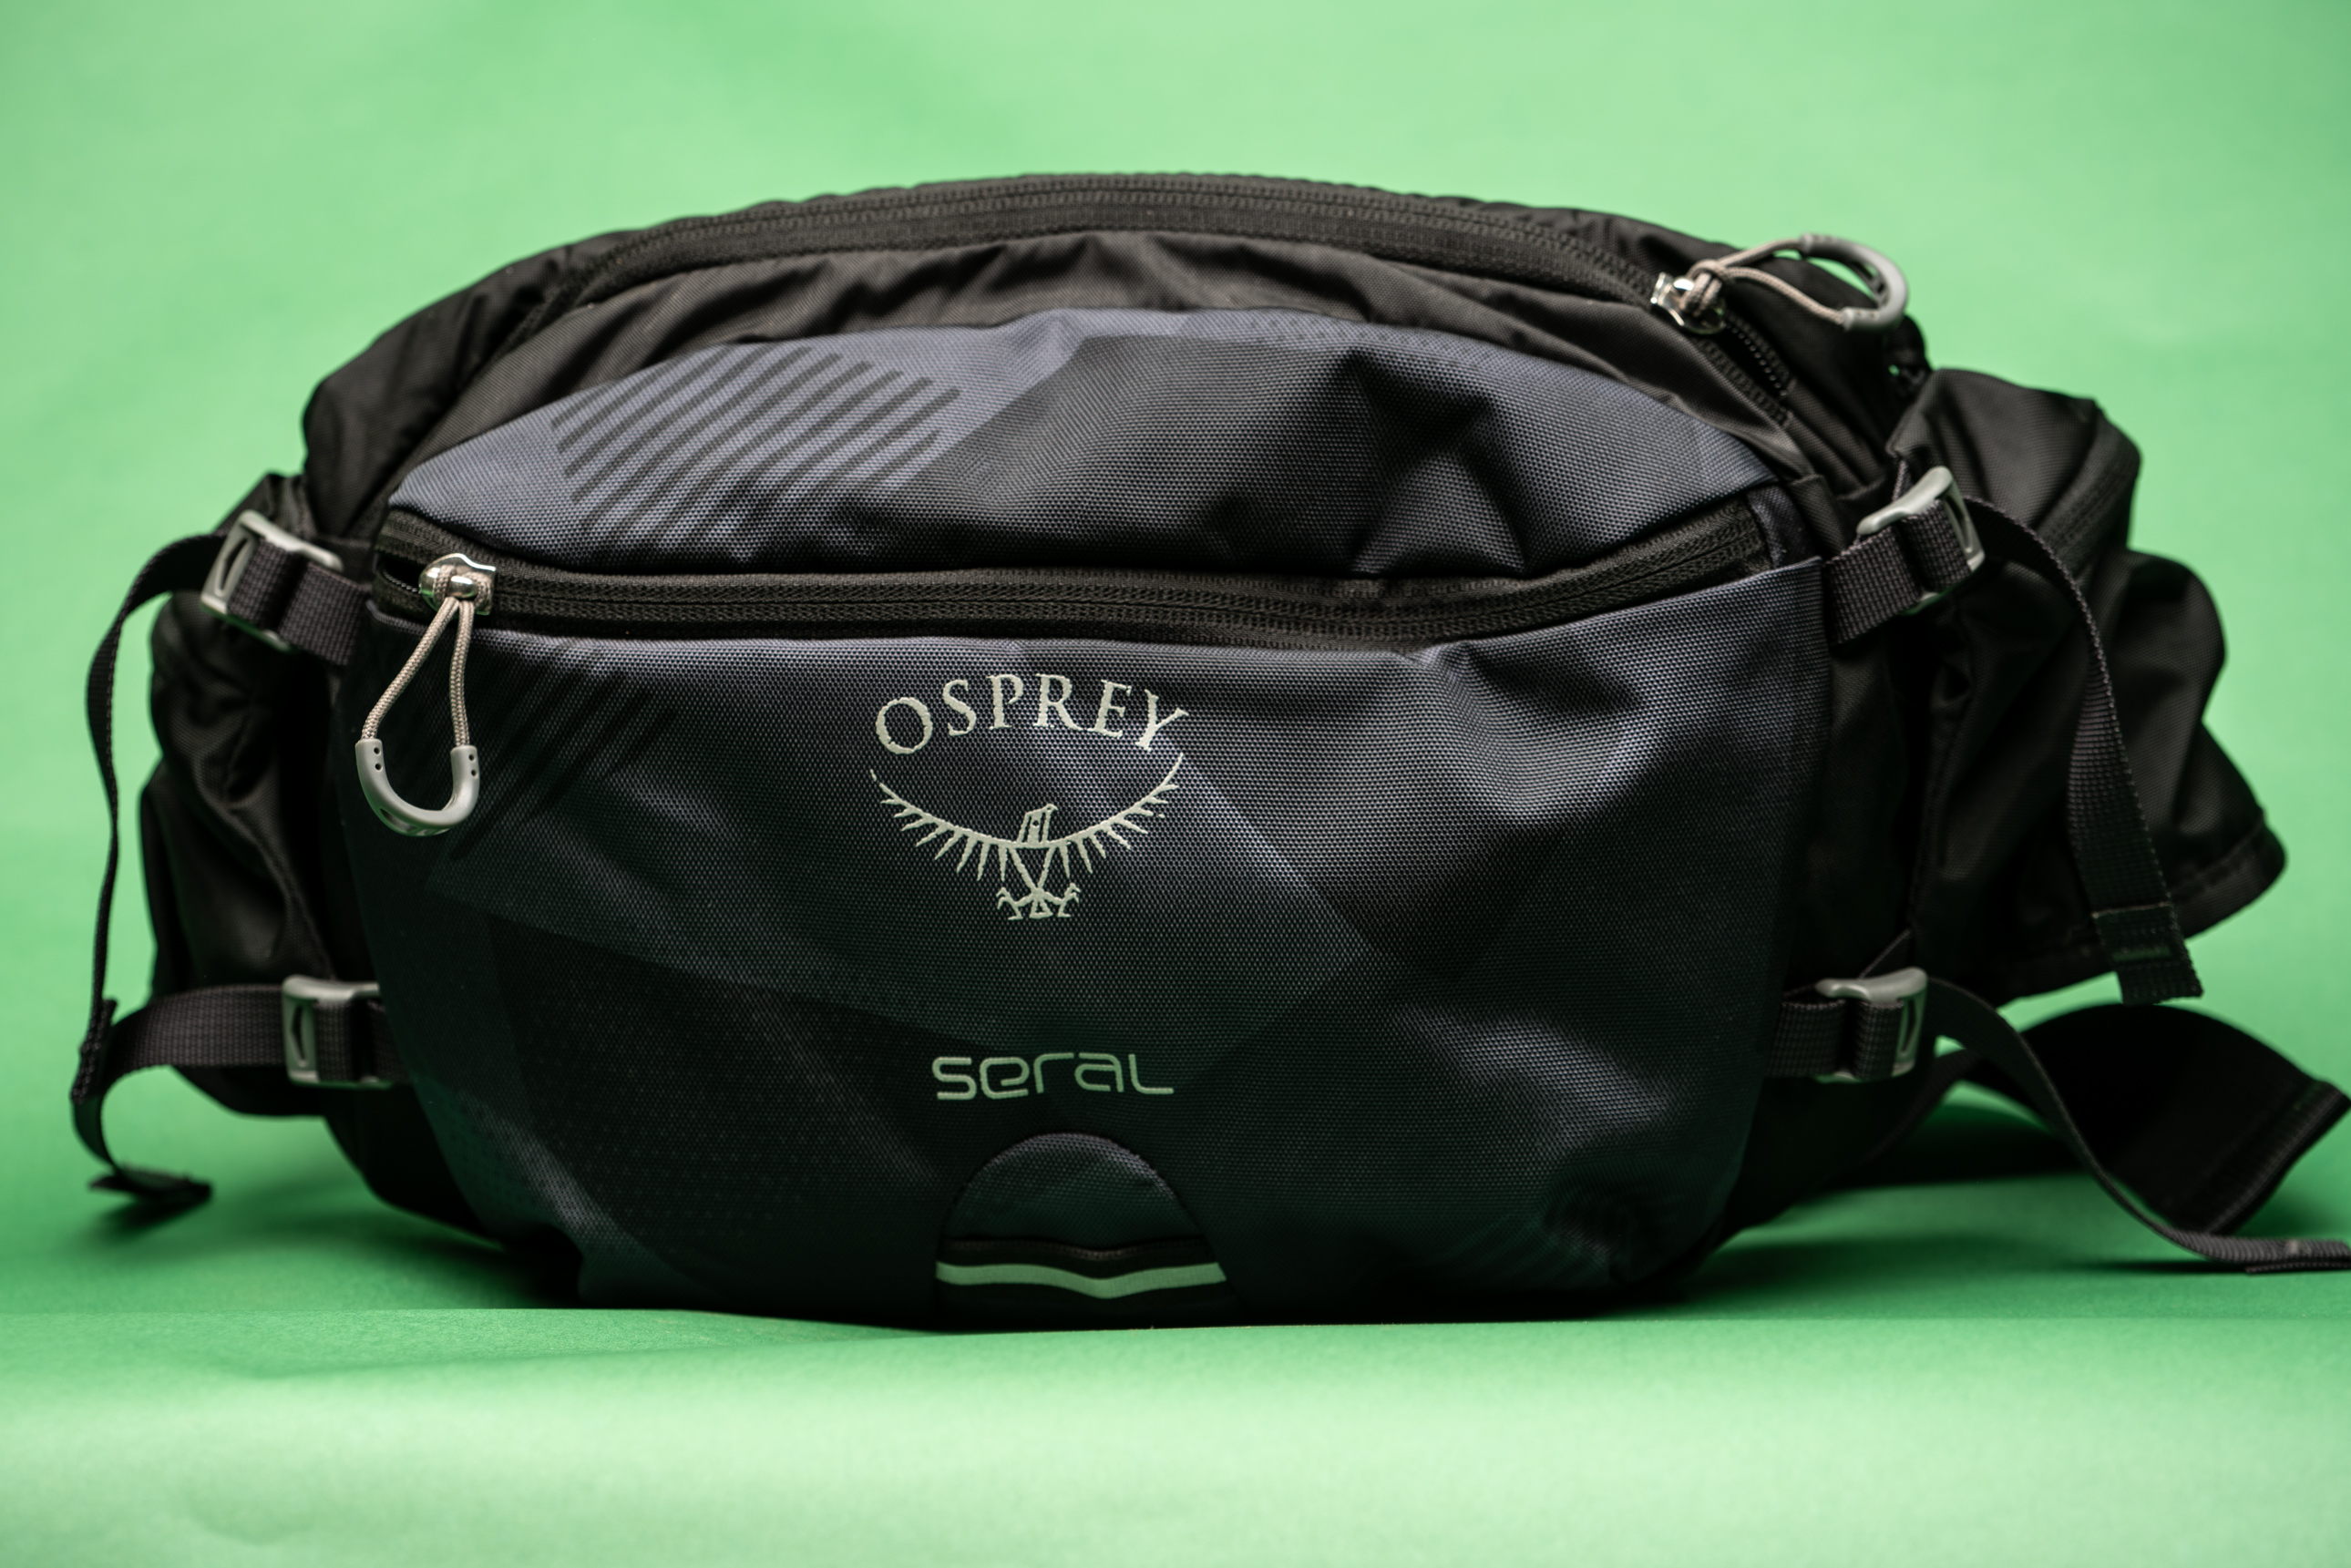 Review: Osprey Seral 1.5 Liter Lumbar Pack